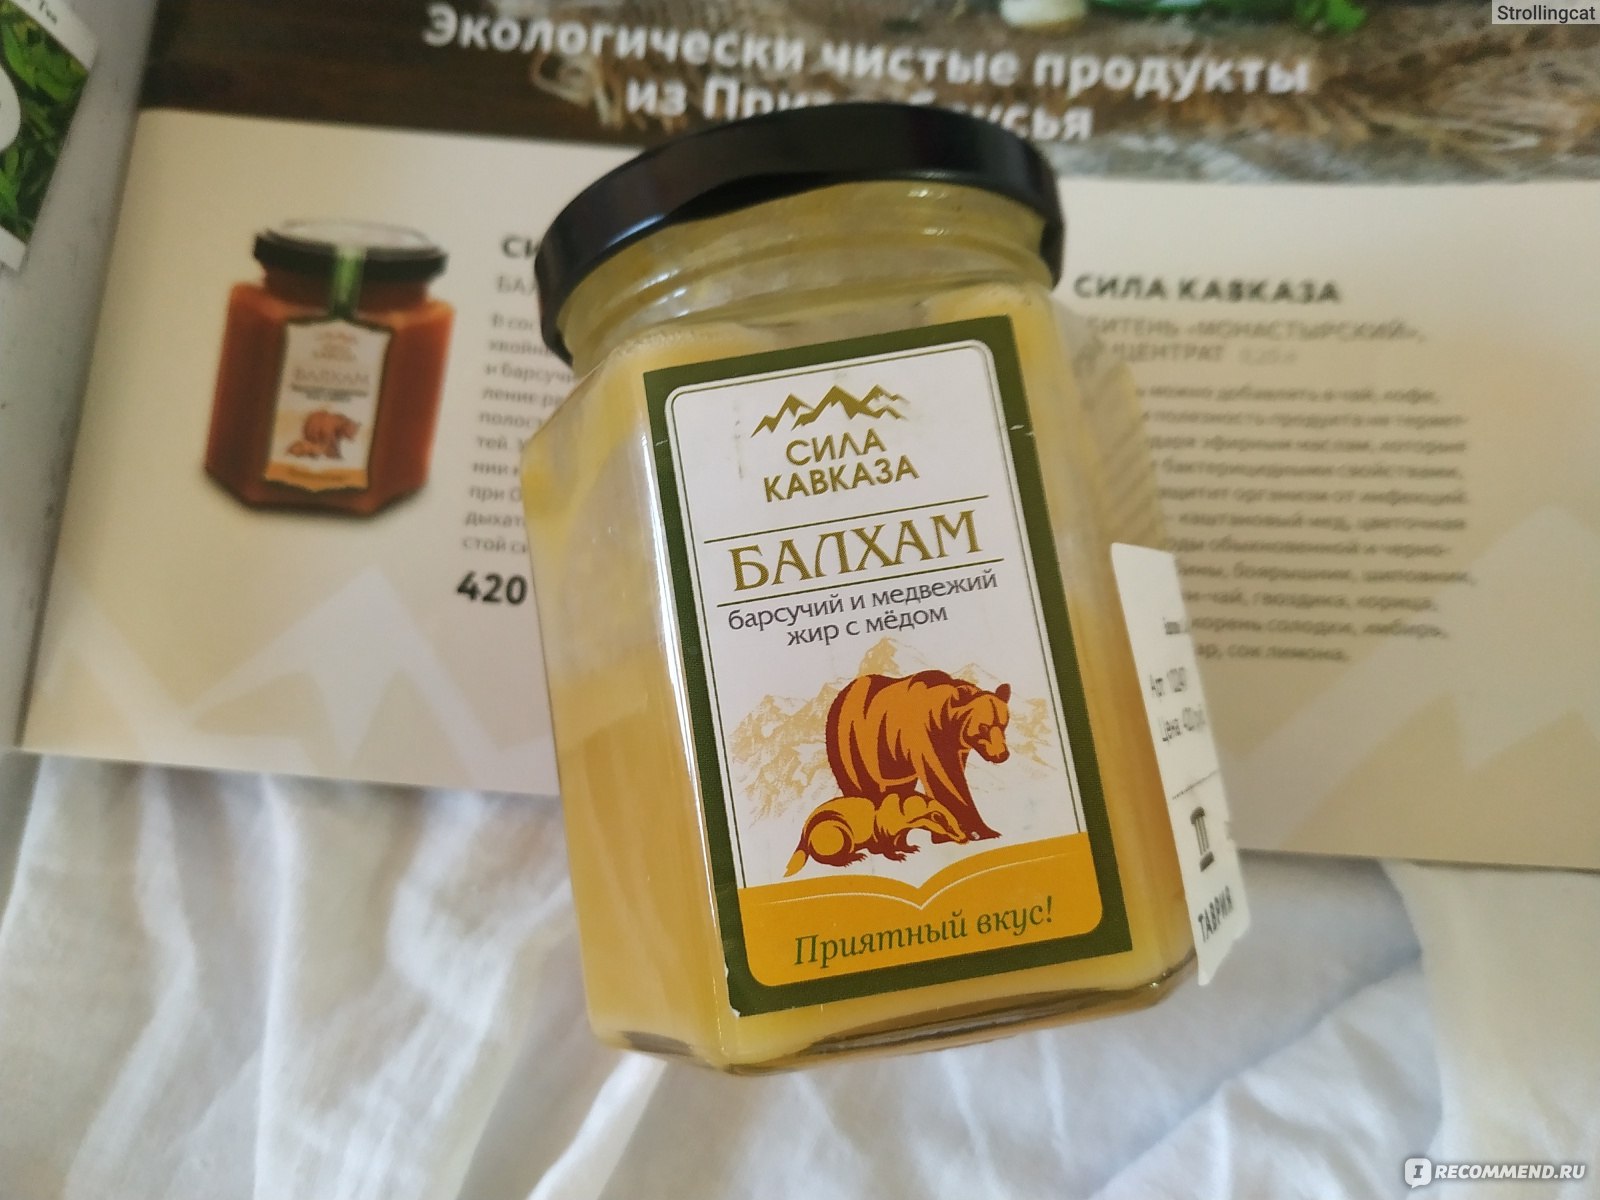 Балхам лекарство цена. Сила Кавказа Балхам барсучий и Медвежий жир с медом. Балхам. Балхам лекарство. Балхам барсучий и Медвежий жир с медом.